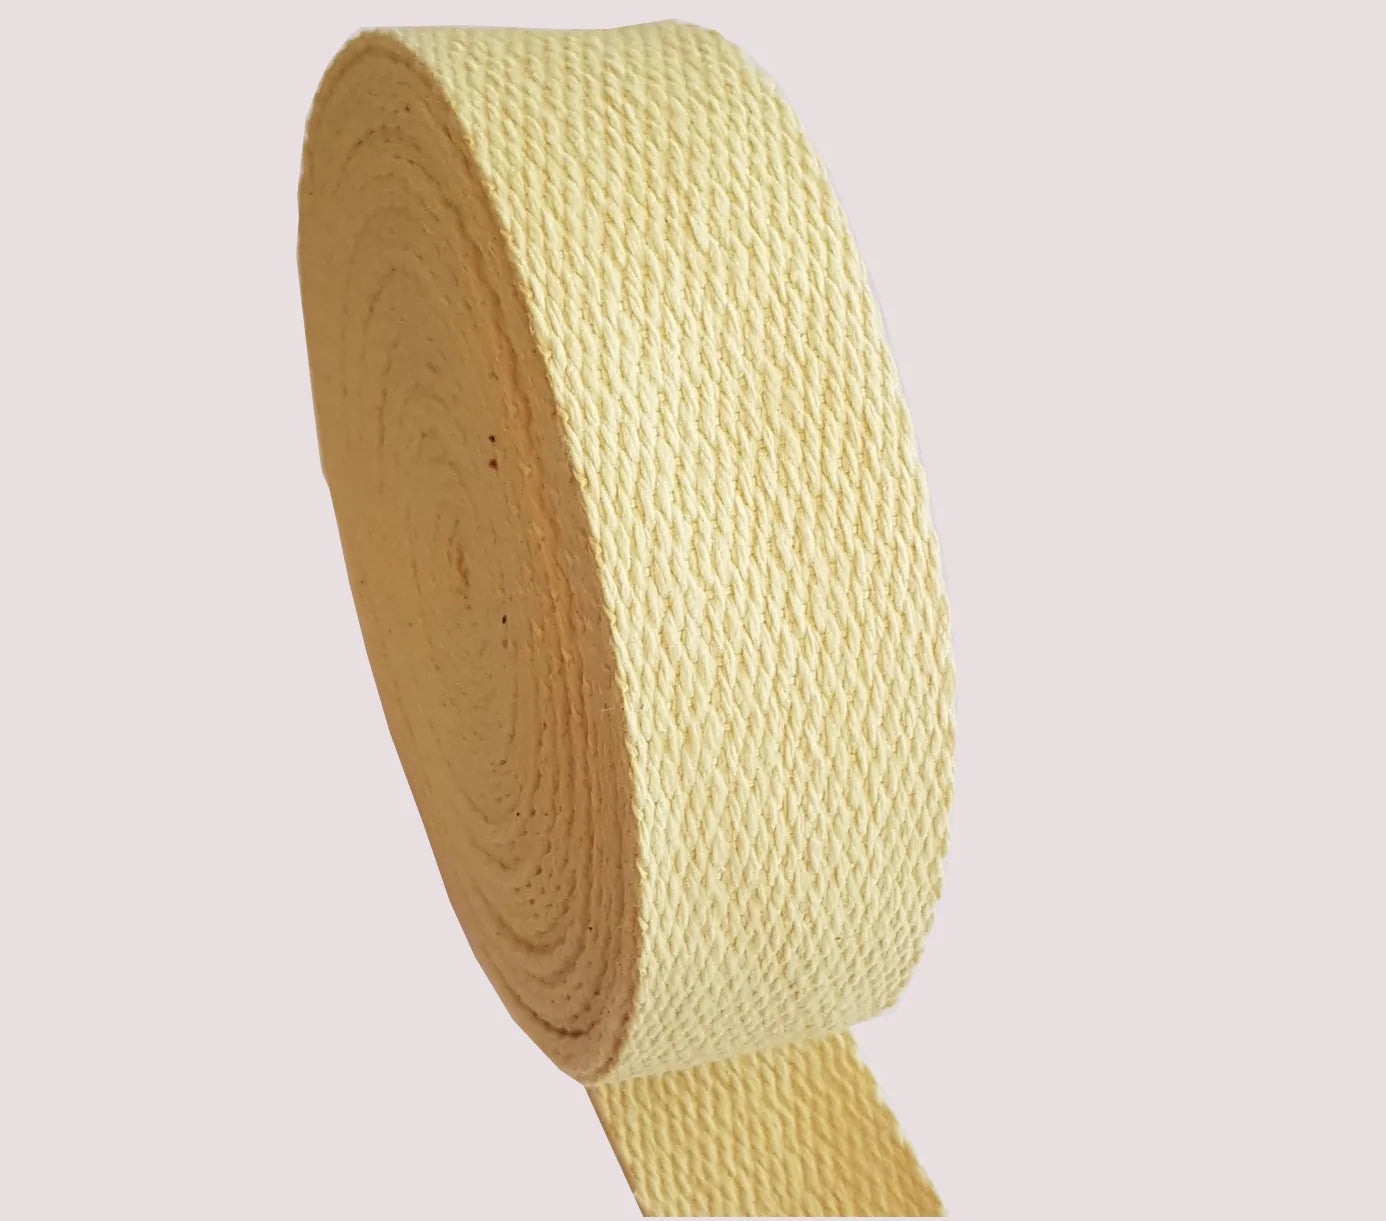 Kevlar aramid wick width 50 mm thick (3mm) roll length 10 meters